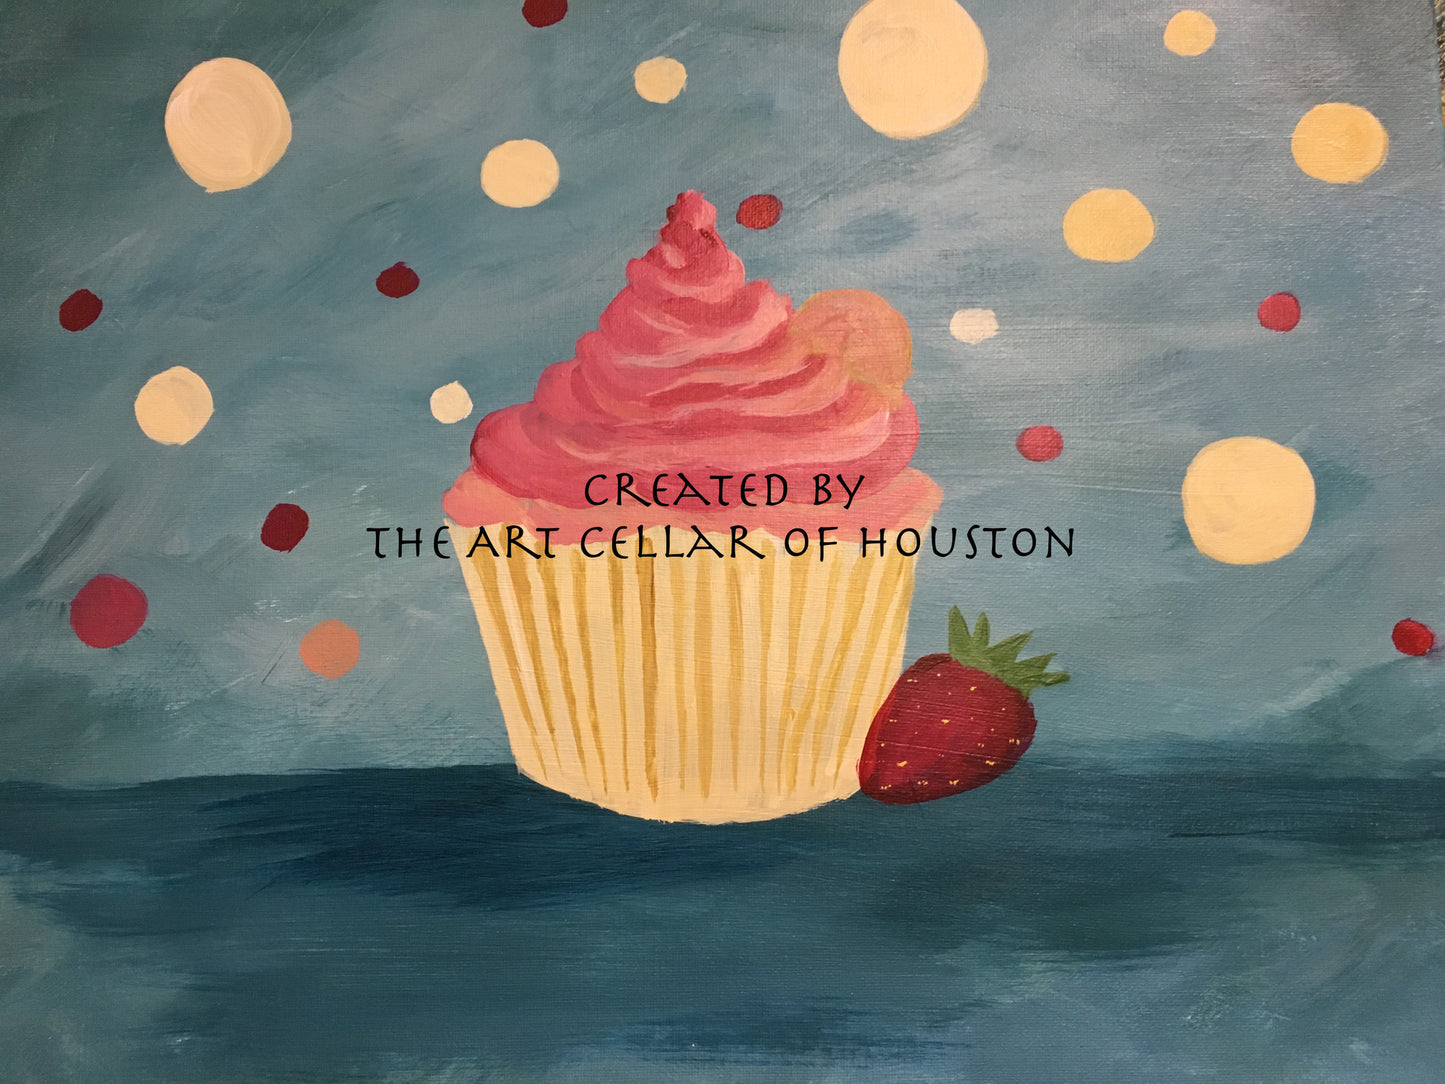 Wed, Apr 12, 330-5pm “Cupcake Love" Kids Paint Houston Public Painting Class